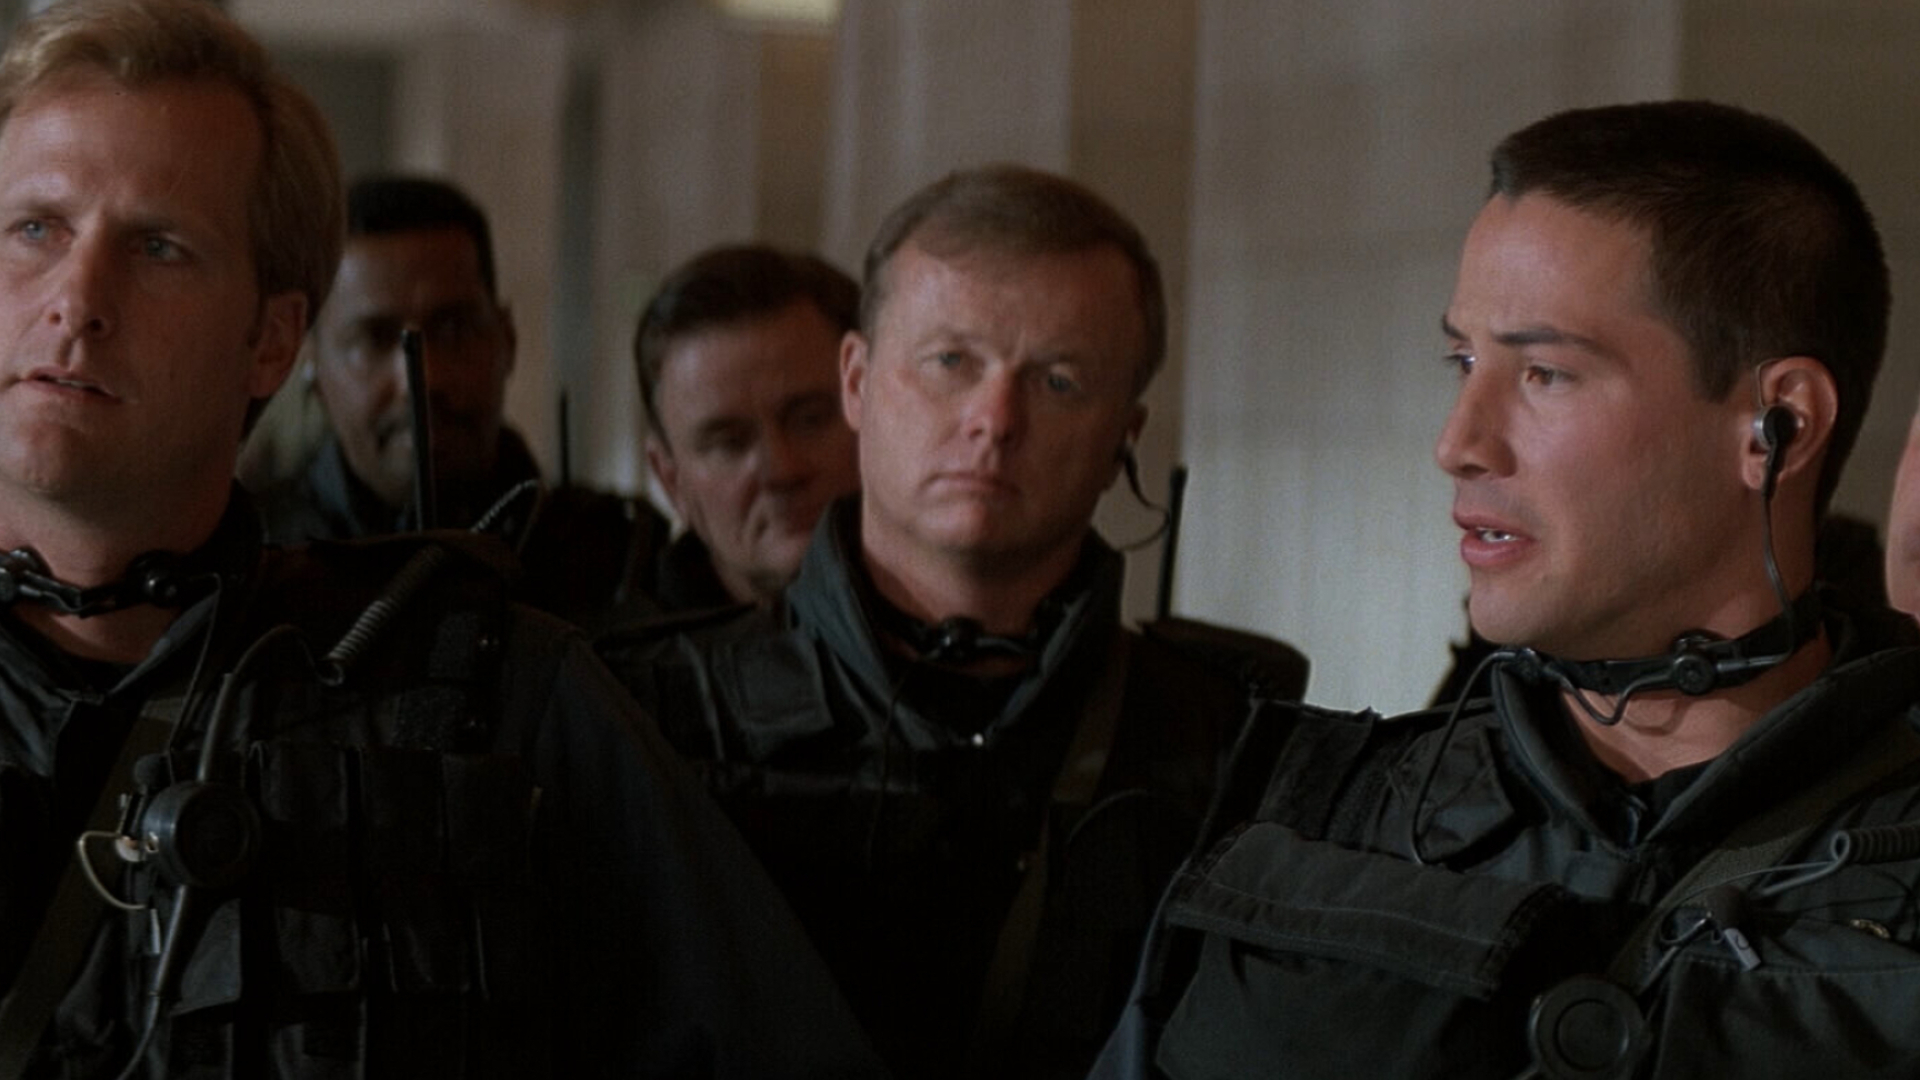 Speed (Movie 1994): Jeff Daniels as Detective Harry Temple, Keanu Reeves as Officer Jack Traven. 1920x1080 Full HD Wallpaper.